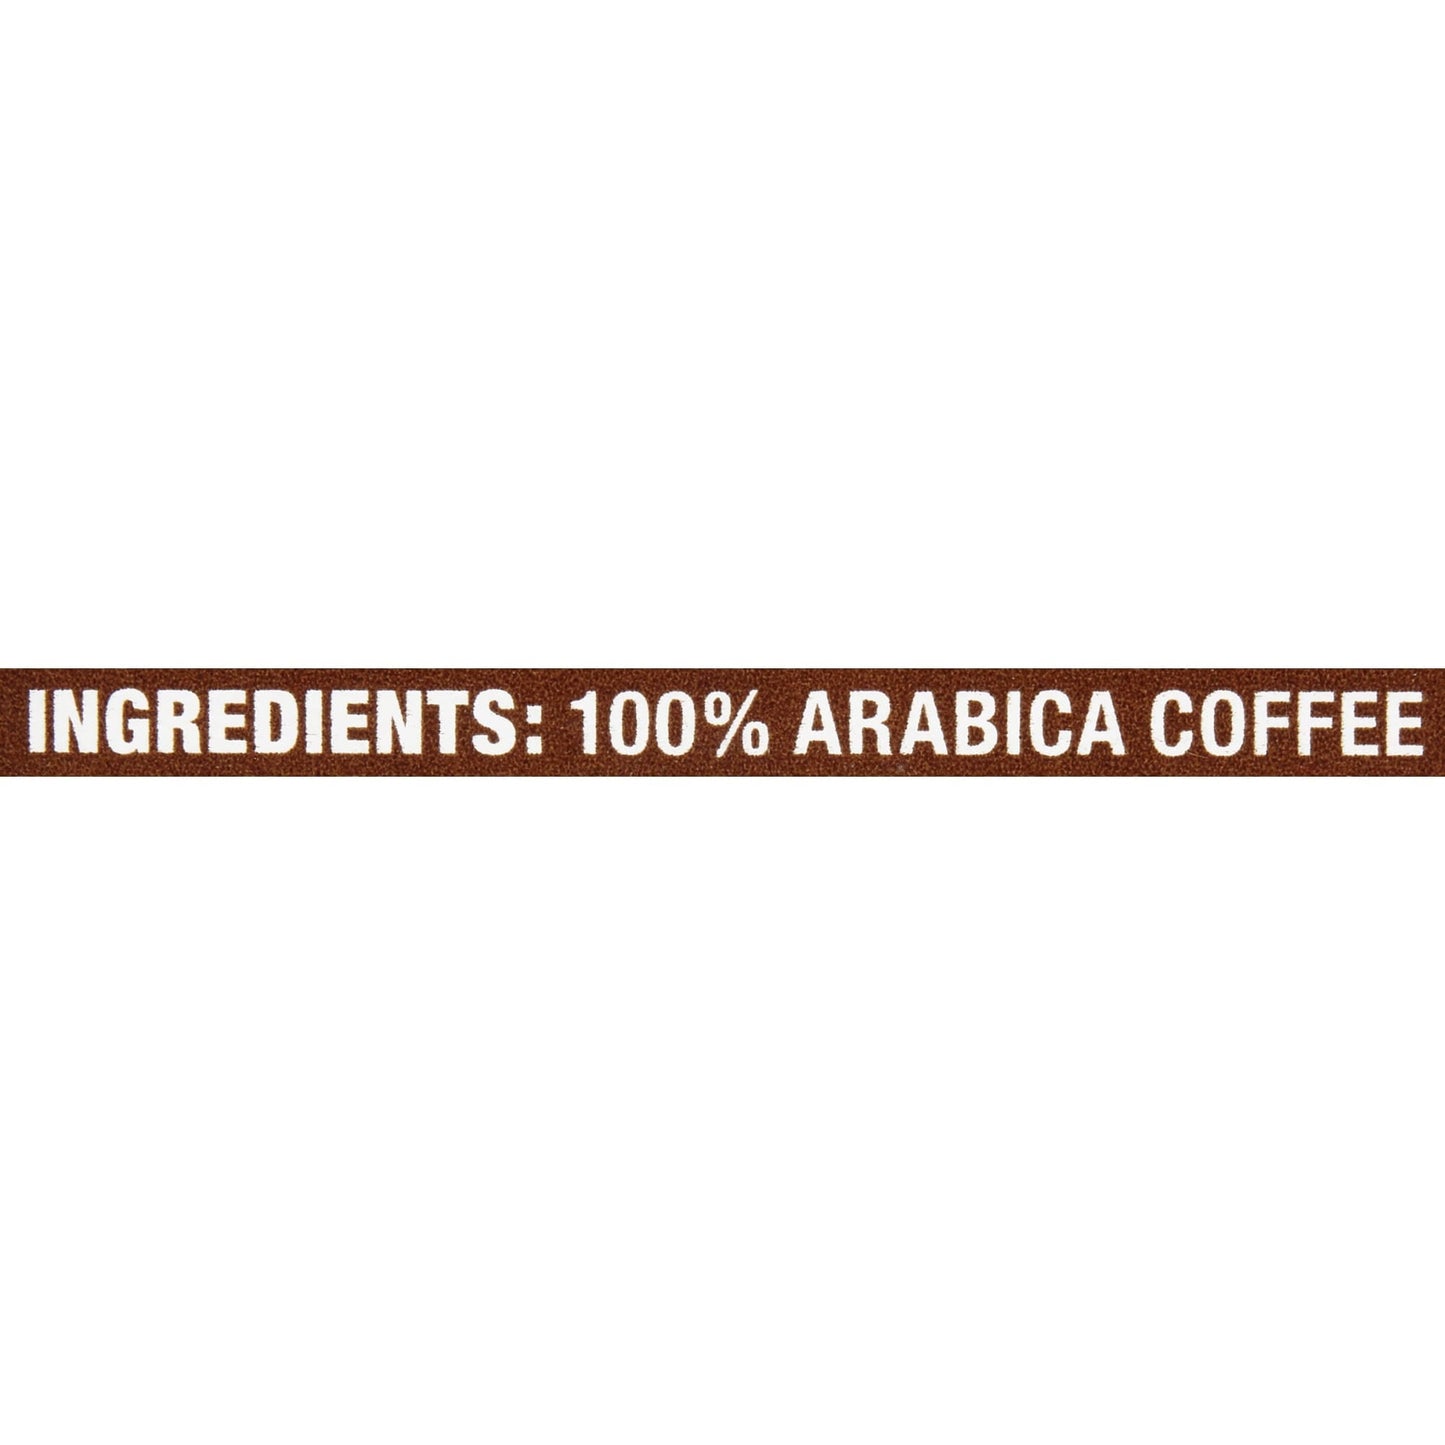 Peet's Coffee Major Dickason's Blend Ground Coffee, Premium Dark Roast, 100% Arabica, 10.5 oz